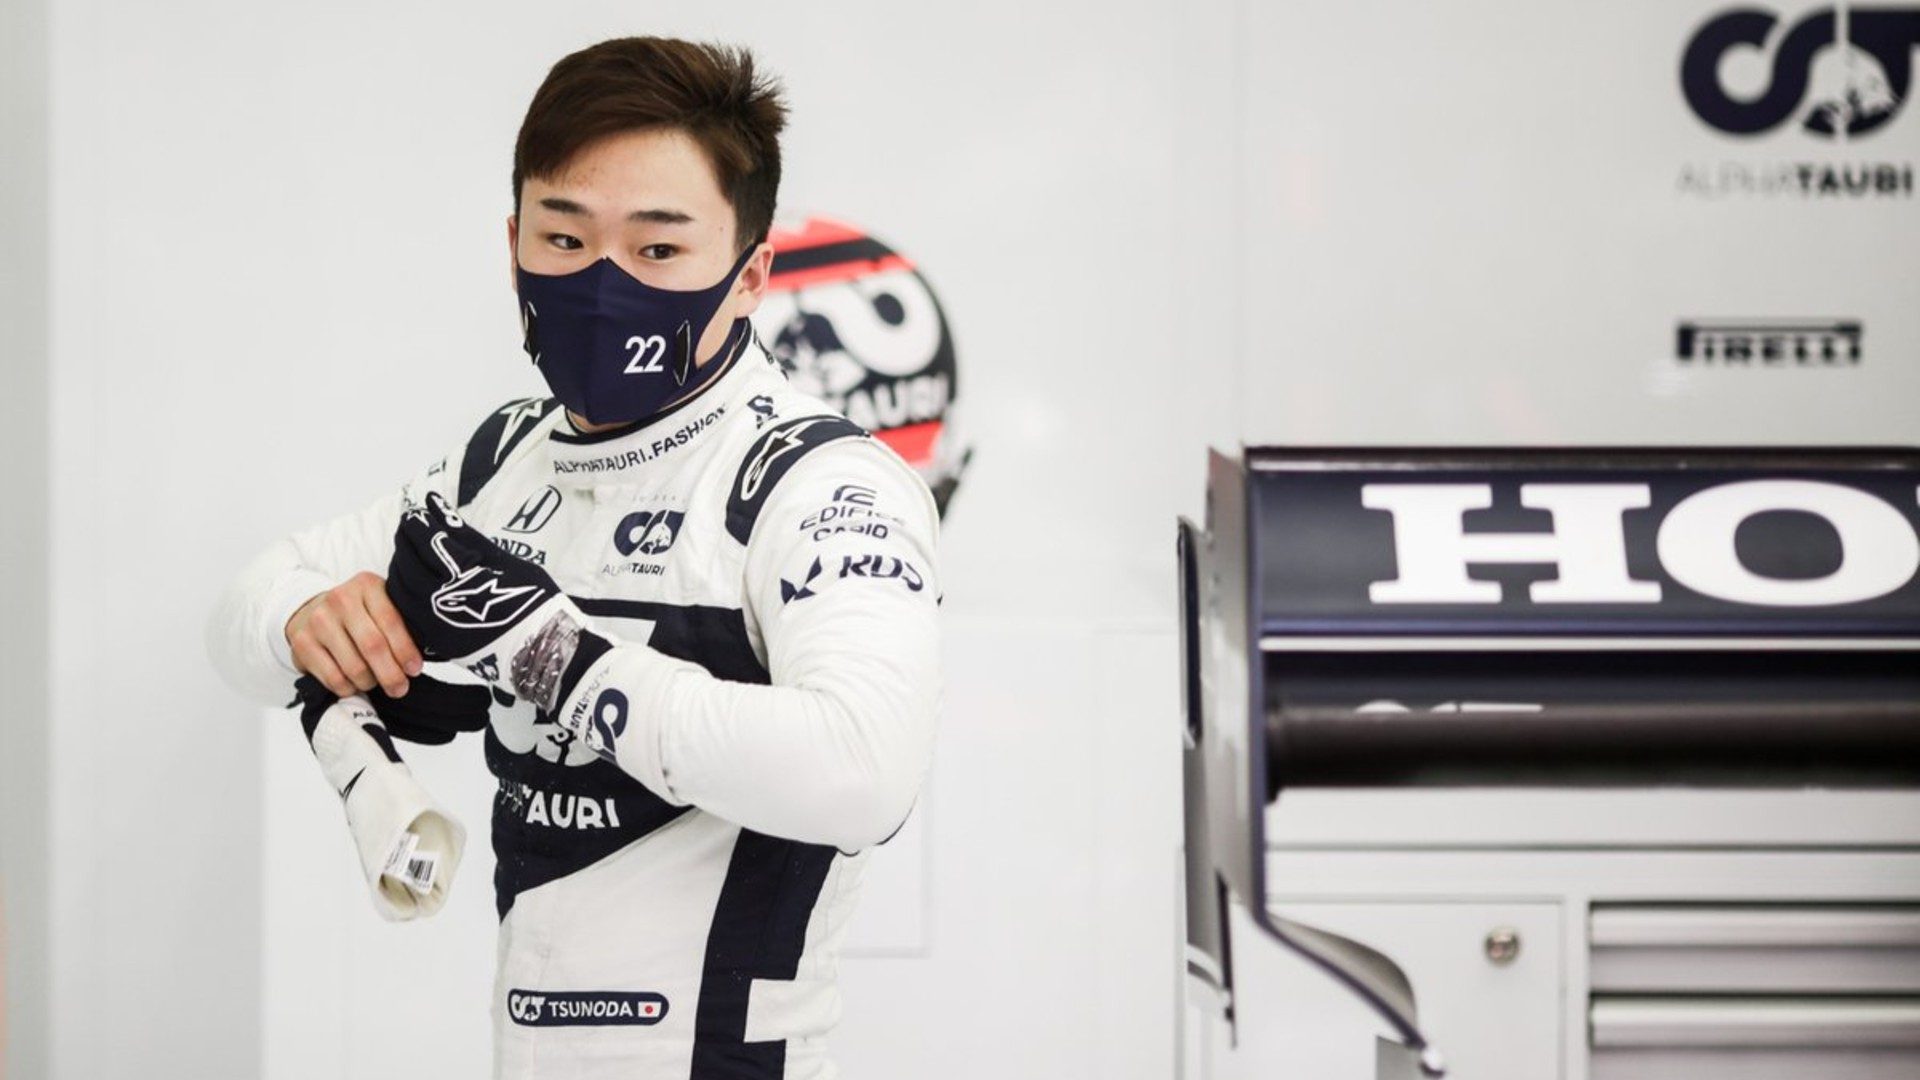 Yuki Tsunoda admits feeling 'good pressure' ahead of 2022 F1 season